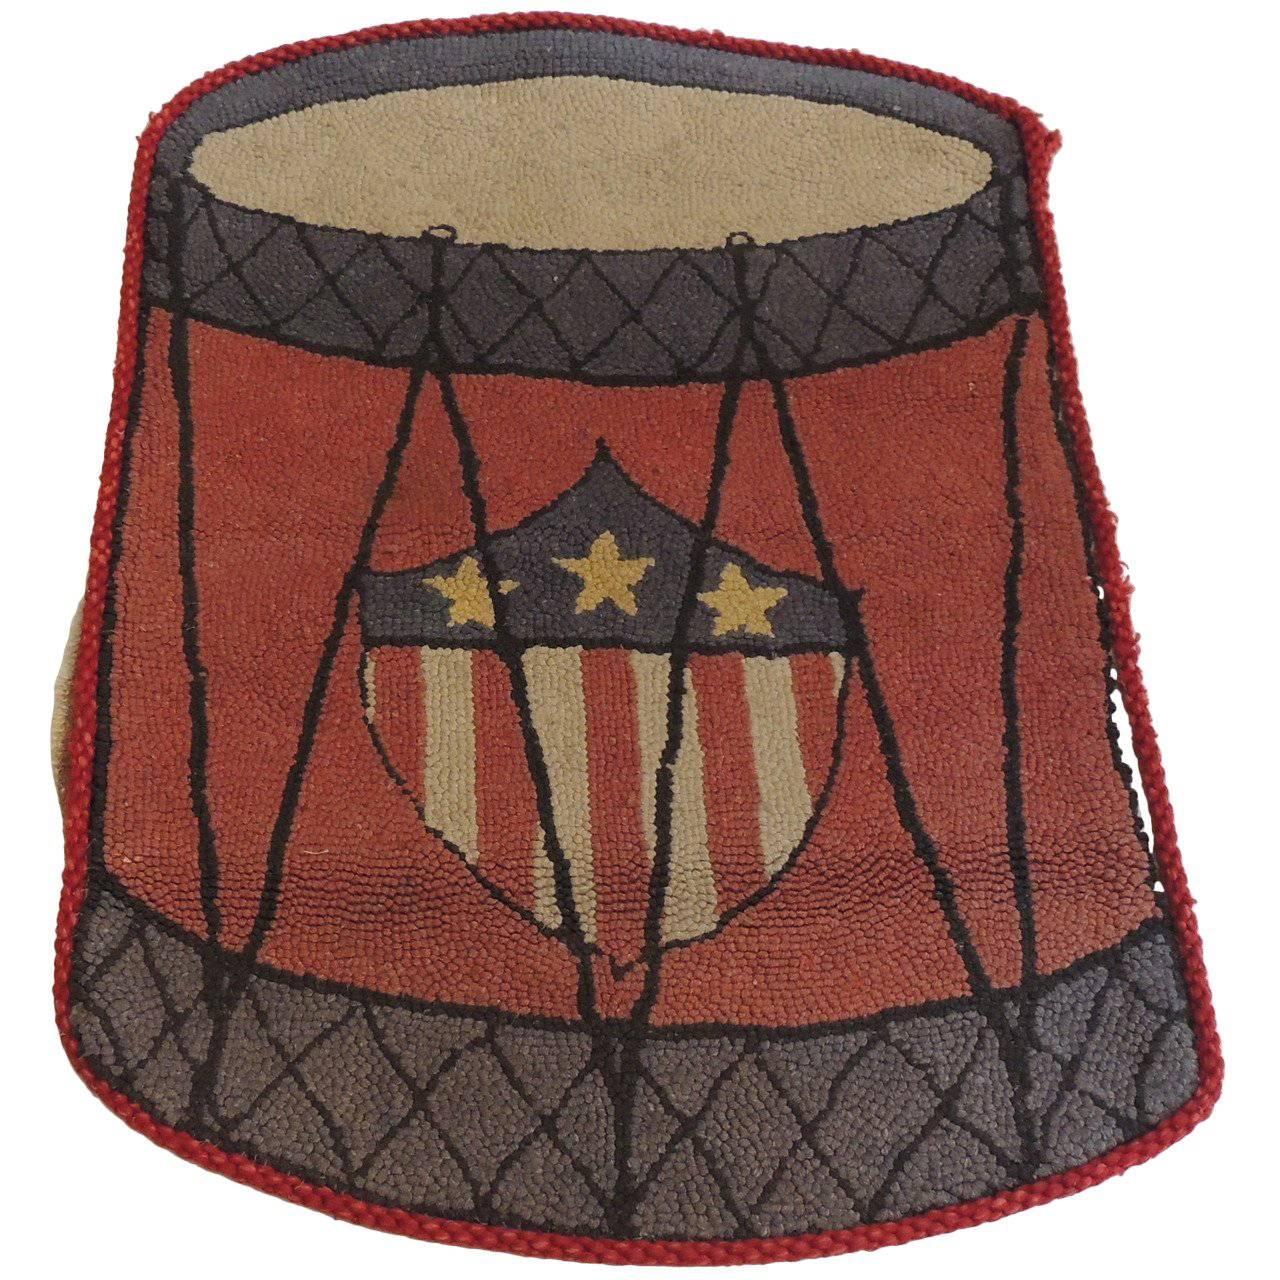 Vintage Red and Black Drummer Hook Rug with American Flag Shield